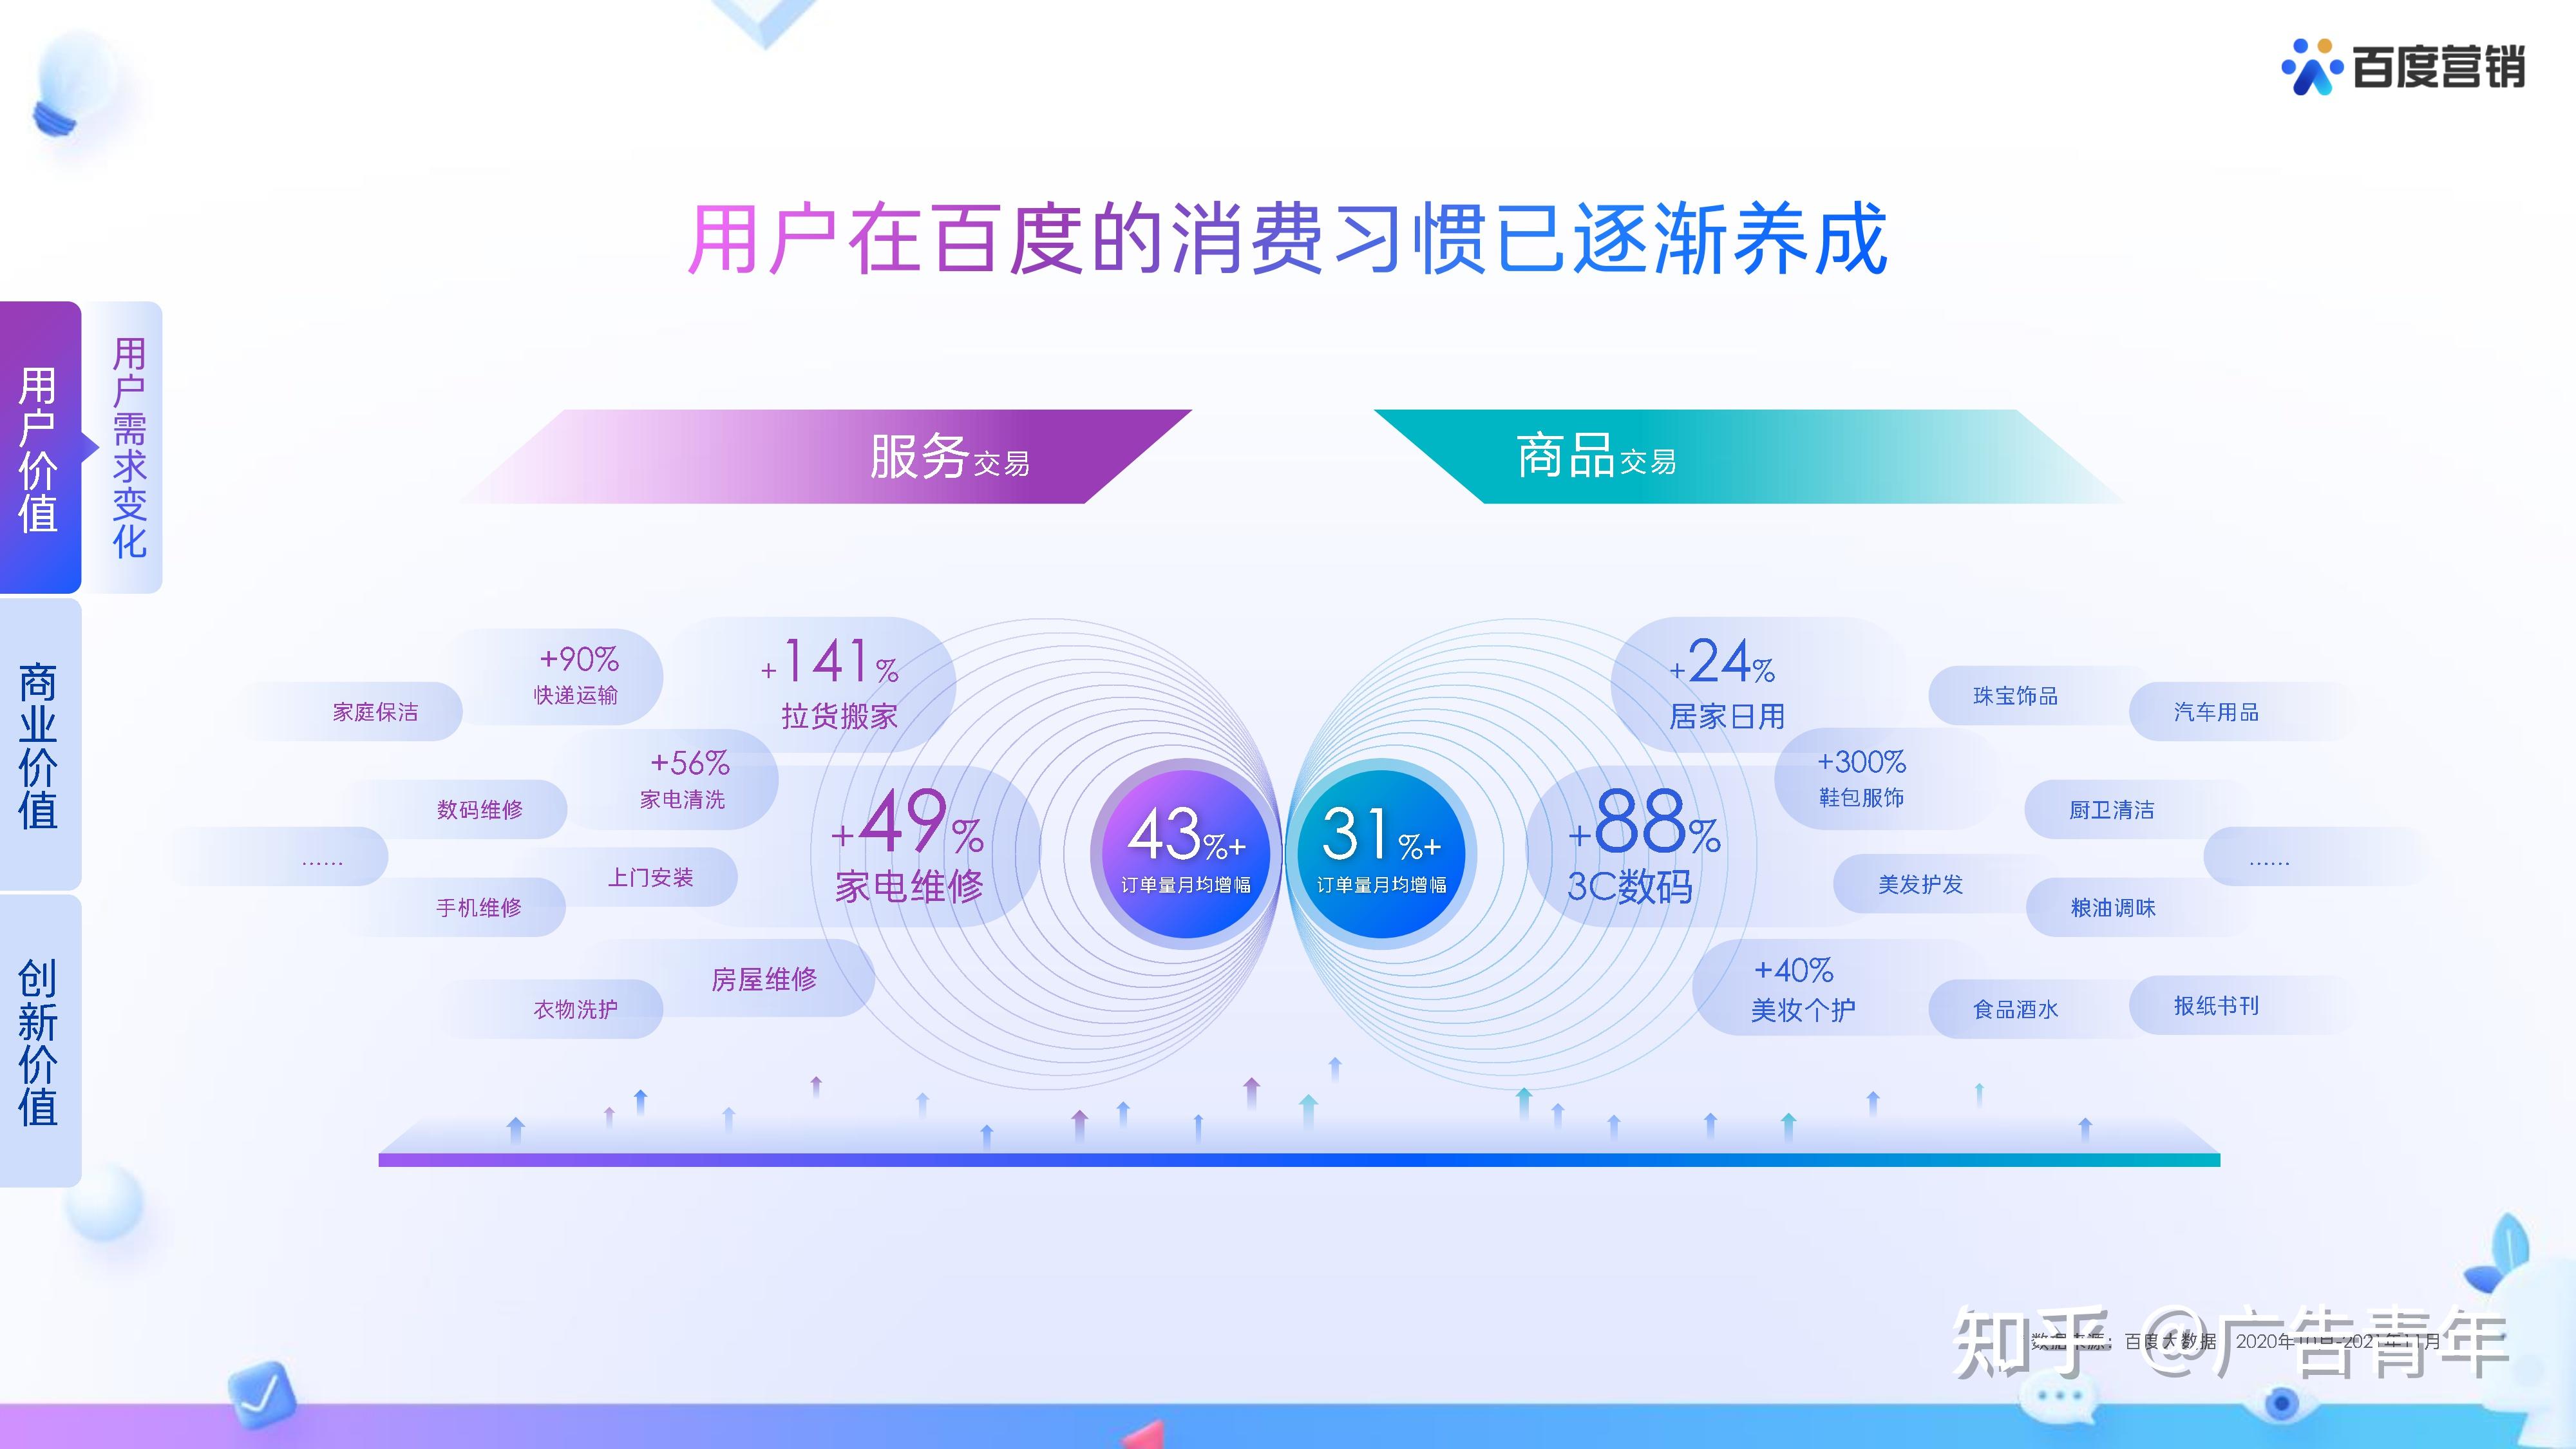 Baidu Ecosystem: The First Milestone of Marketing in China